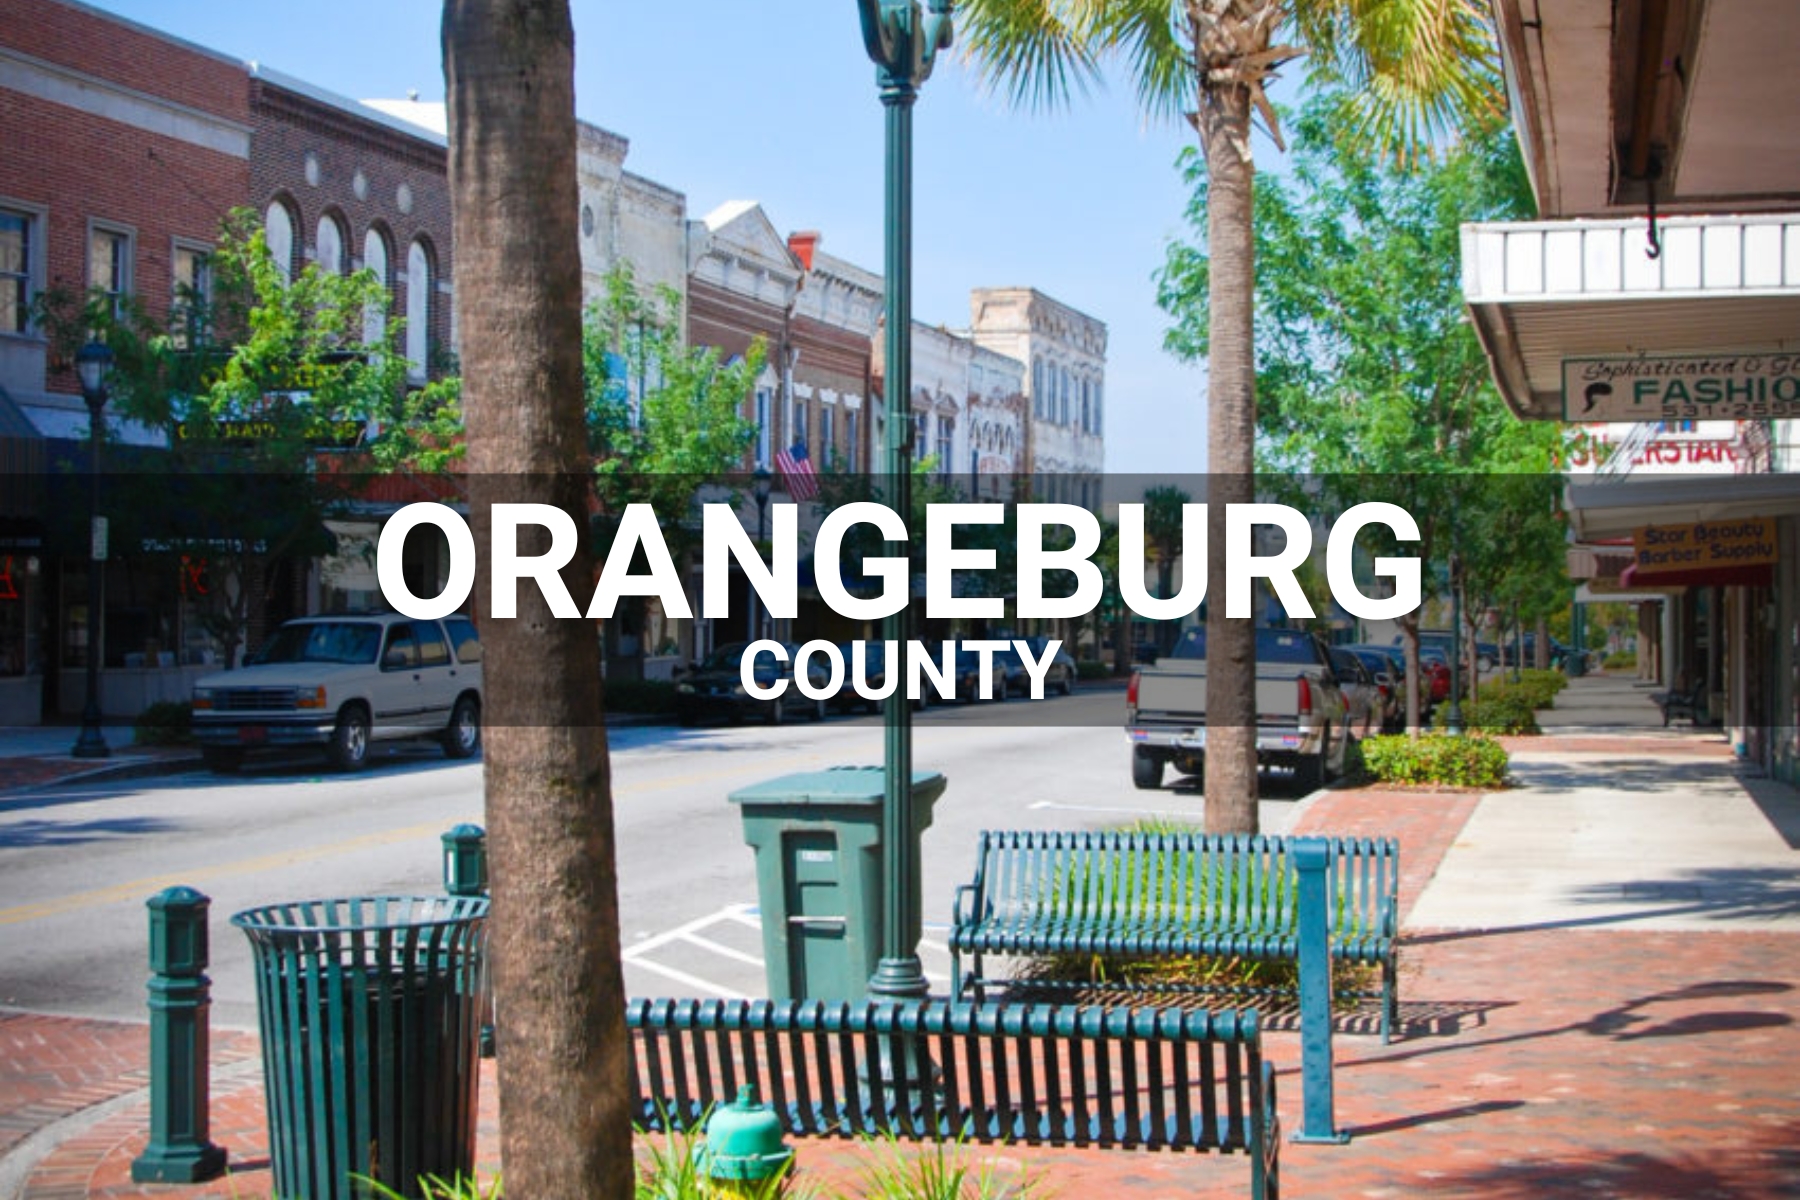 Orangeburg county